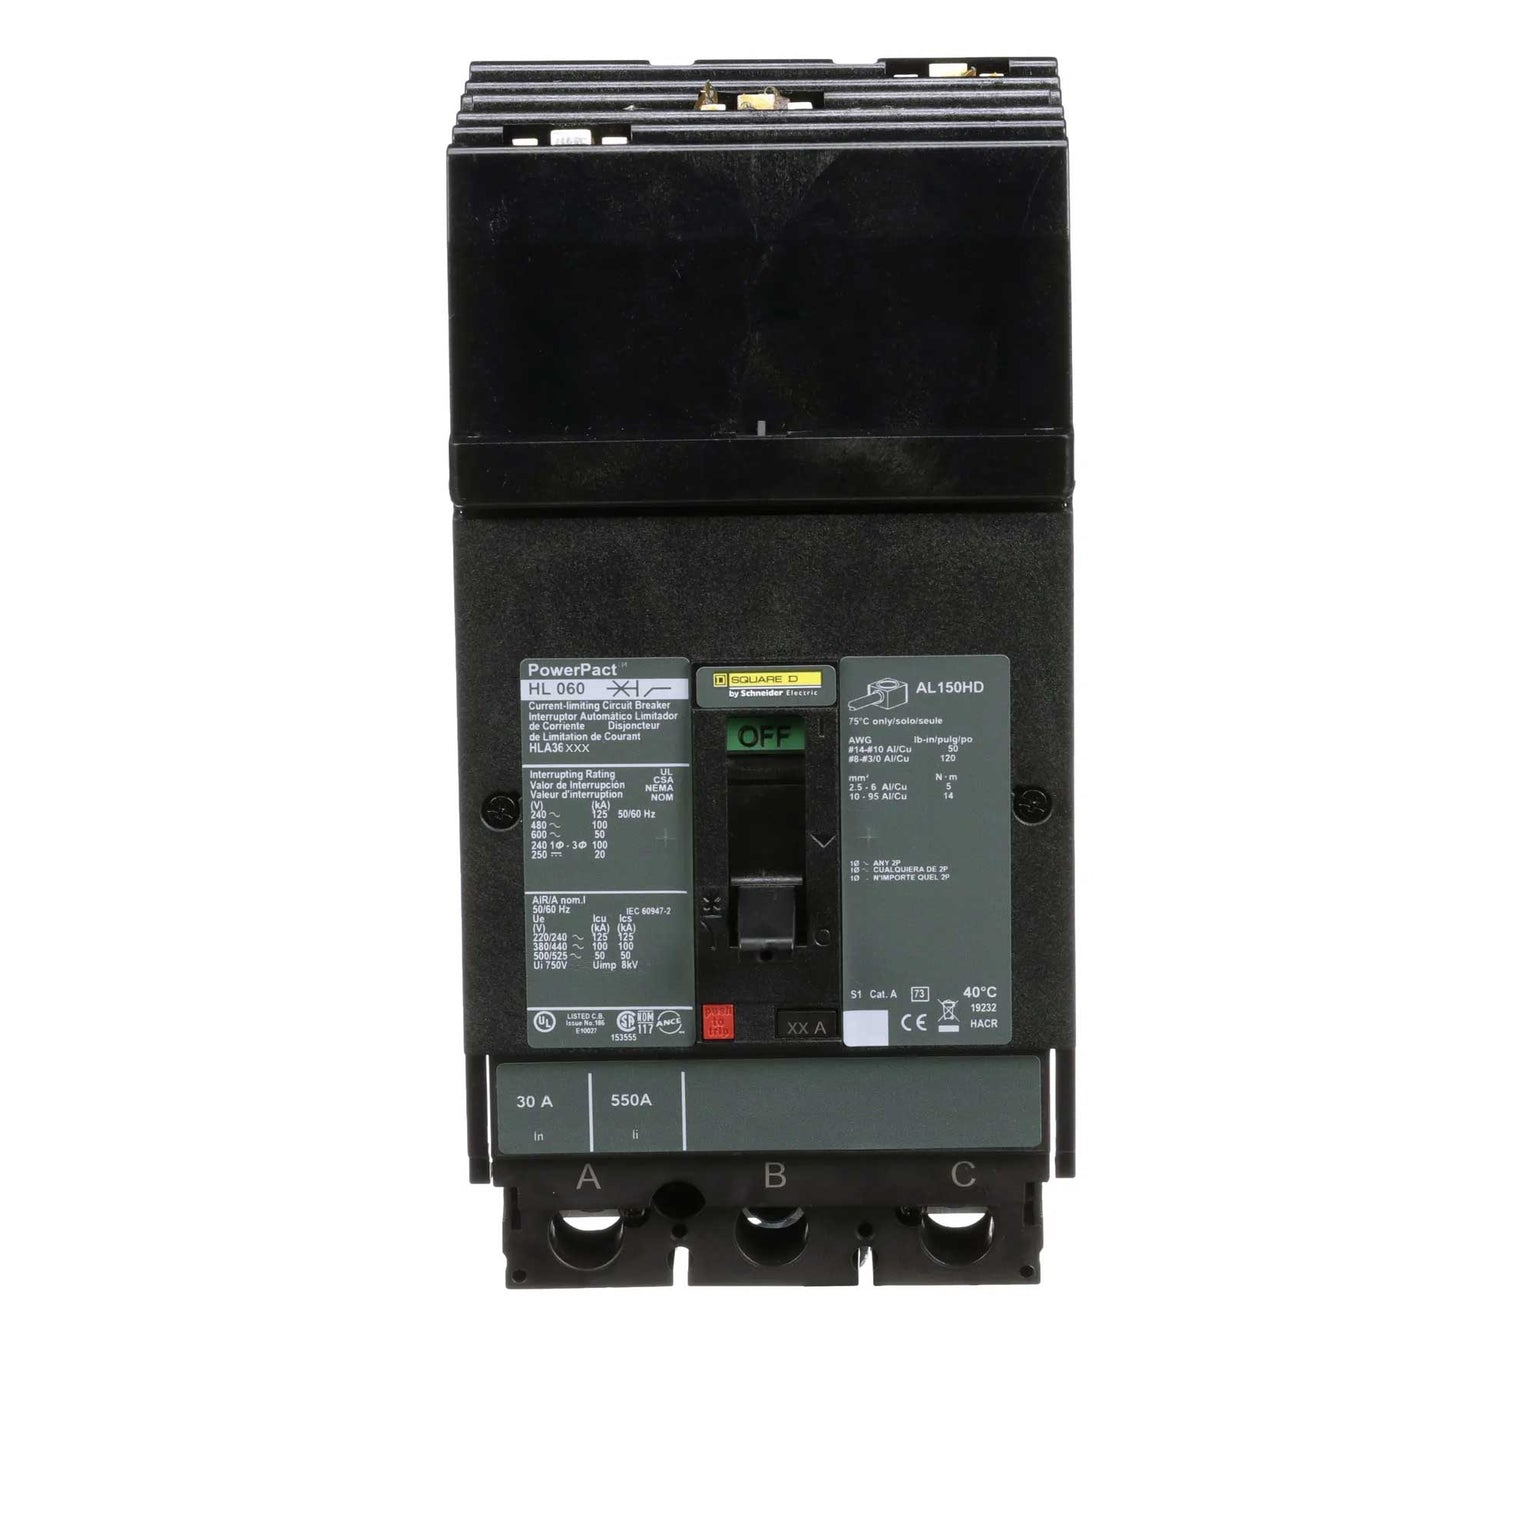 HLA36060 - Square D - Molded Case Circuit Breaker